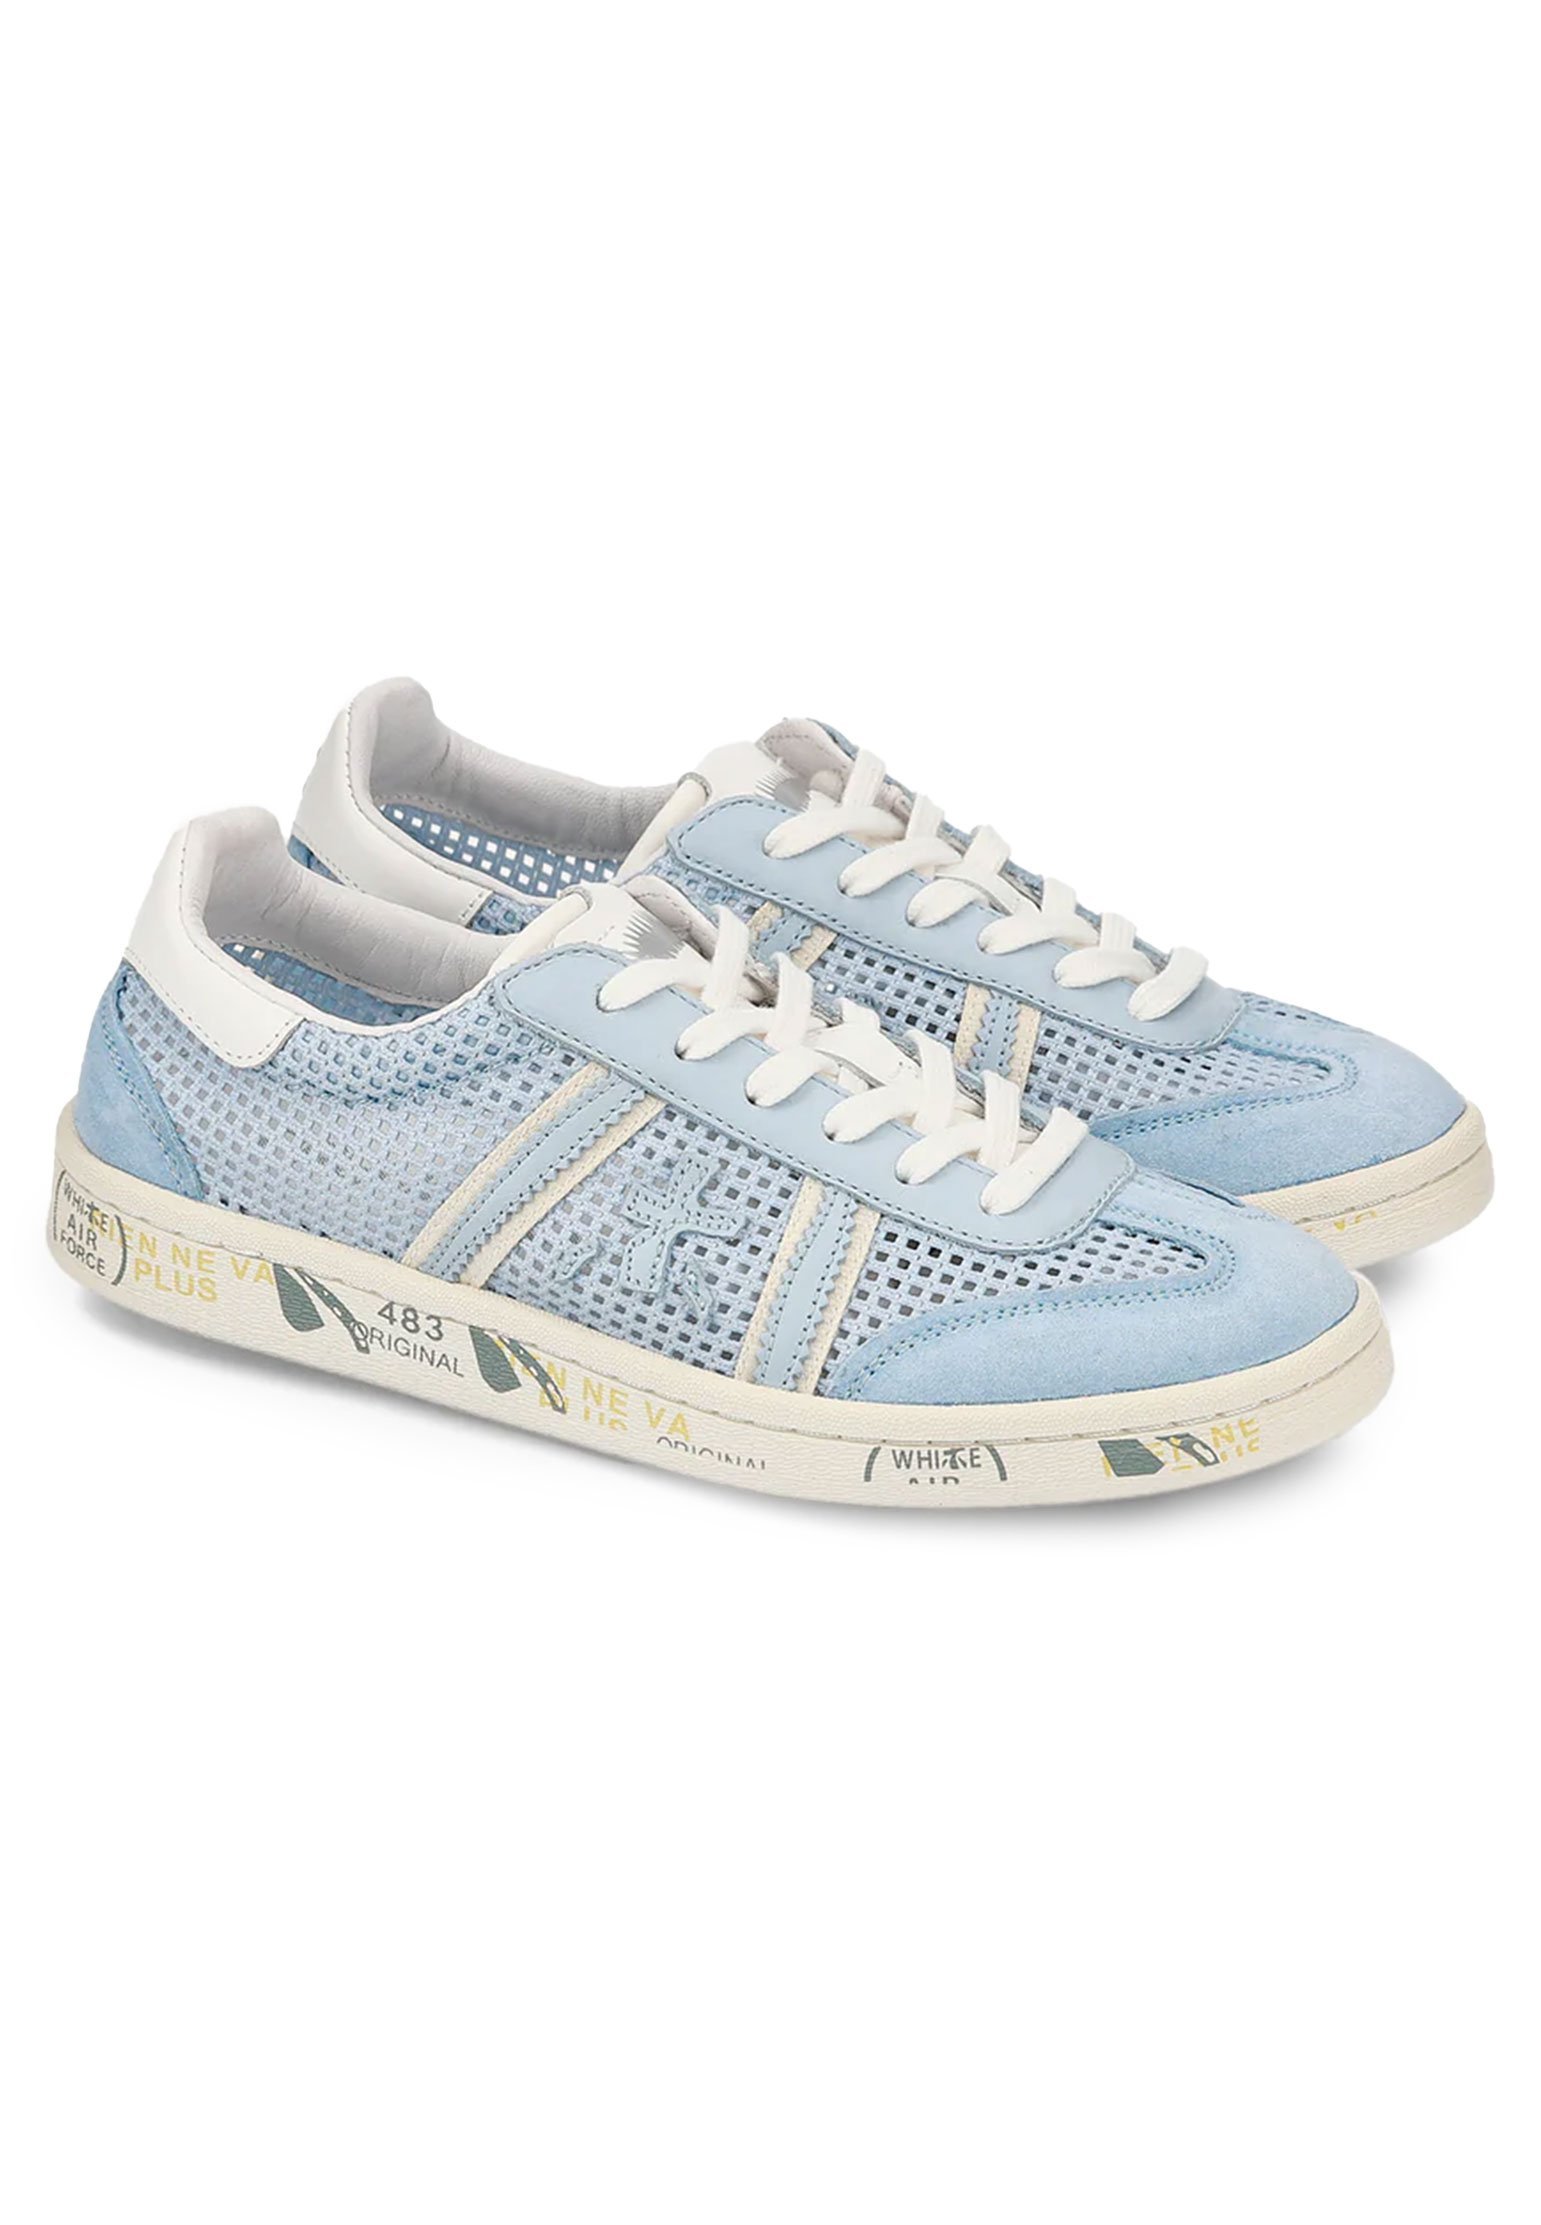 Sneakers PREMIATA Color: light blue (Code: 4193) in online store Allure